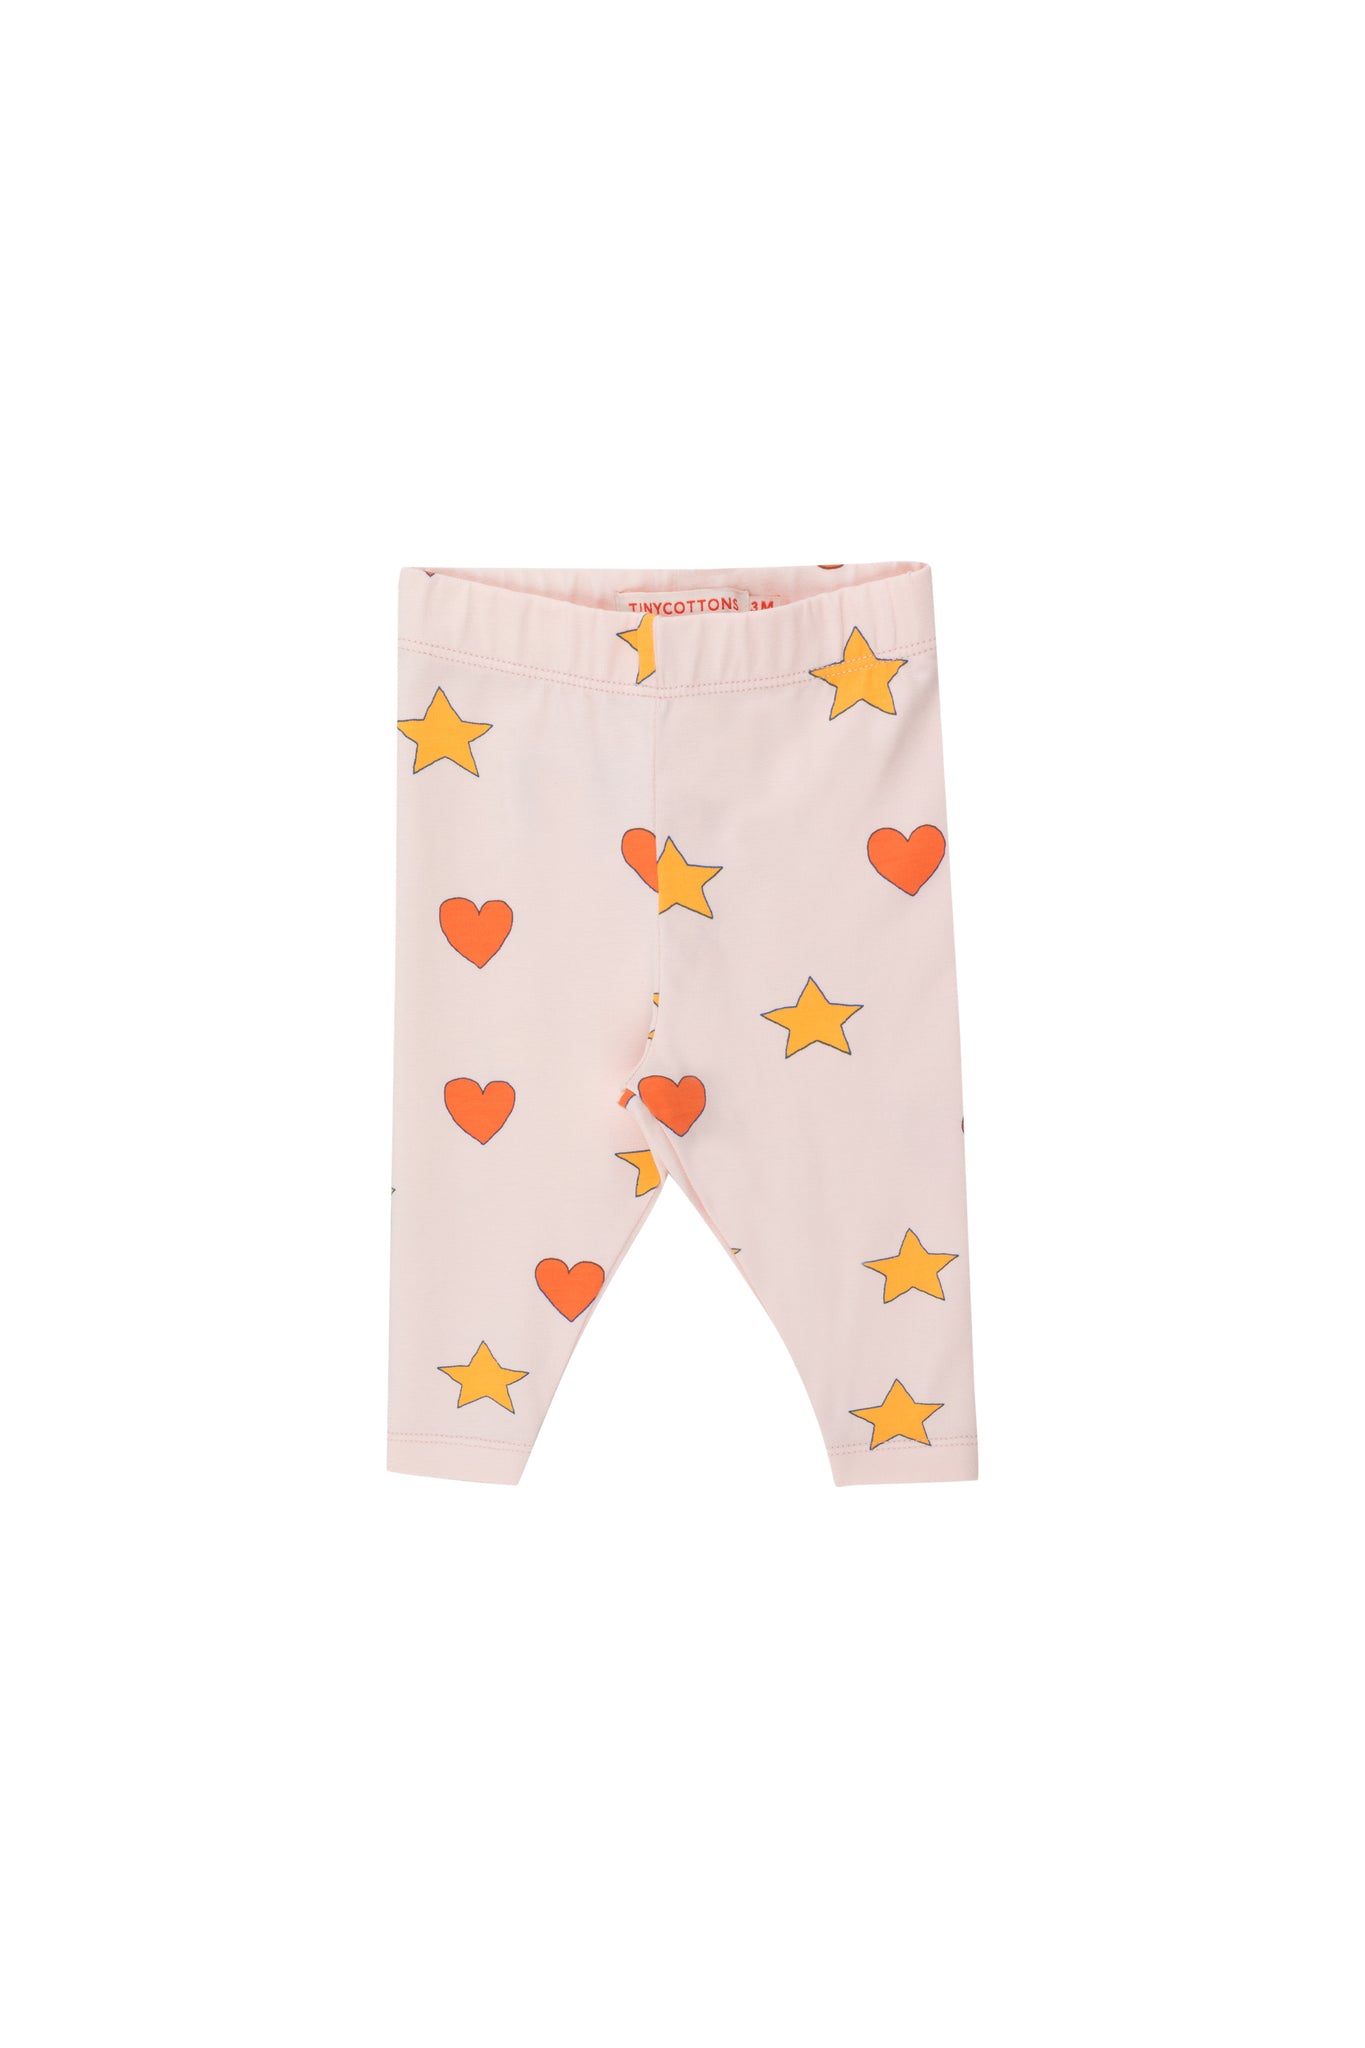 HEARTS STARS BABY PANT pastel pink